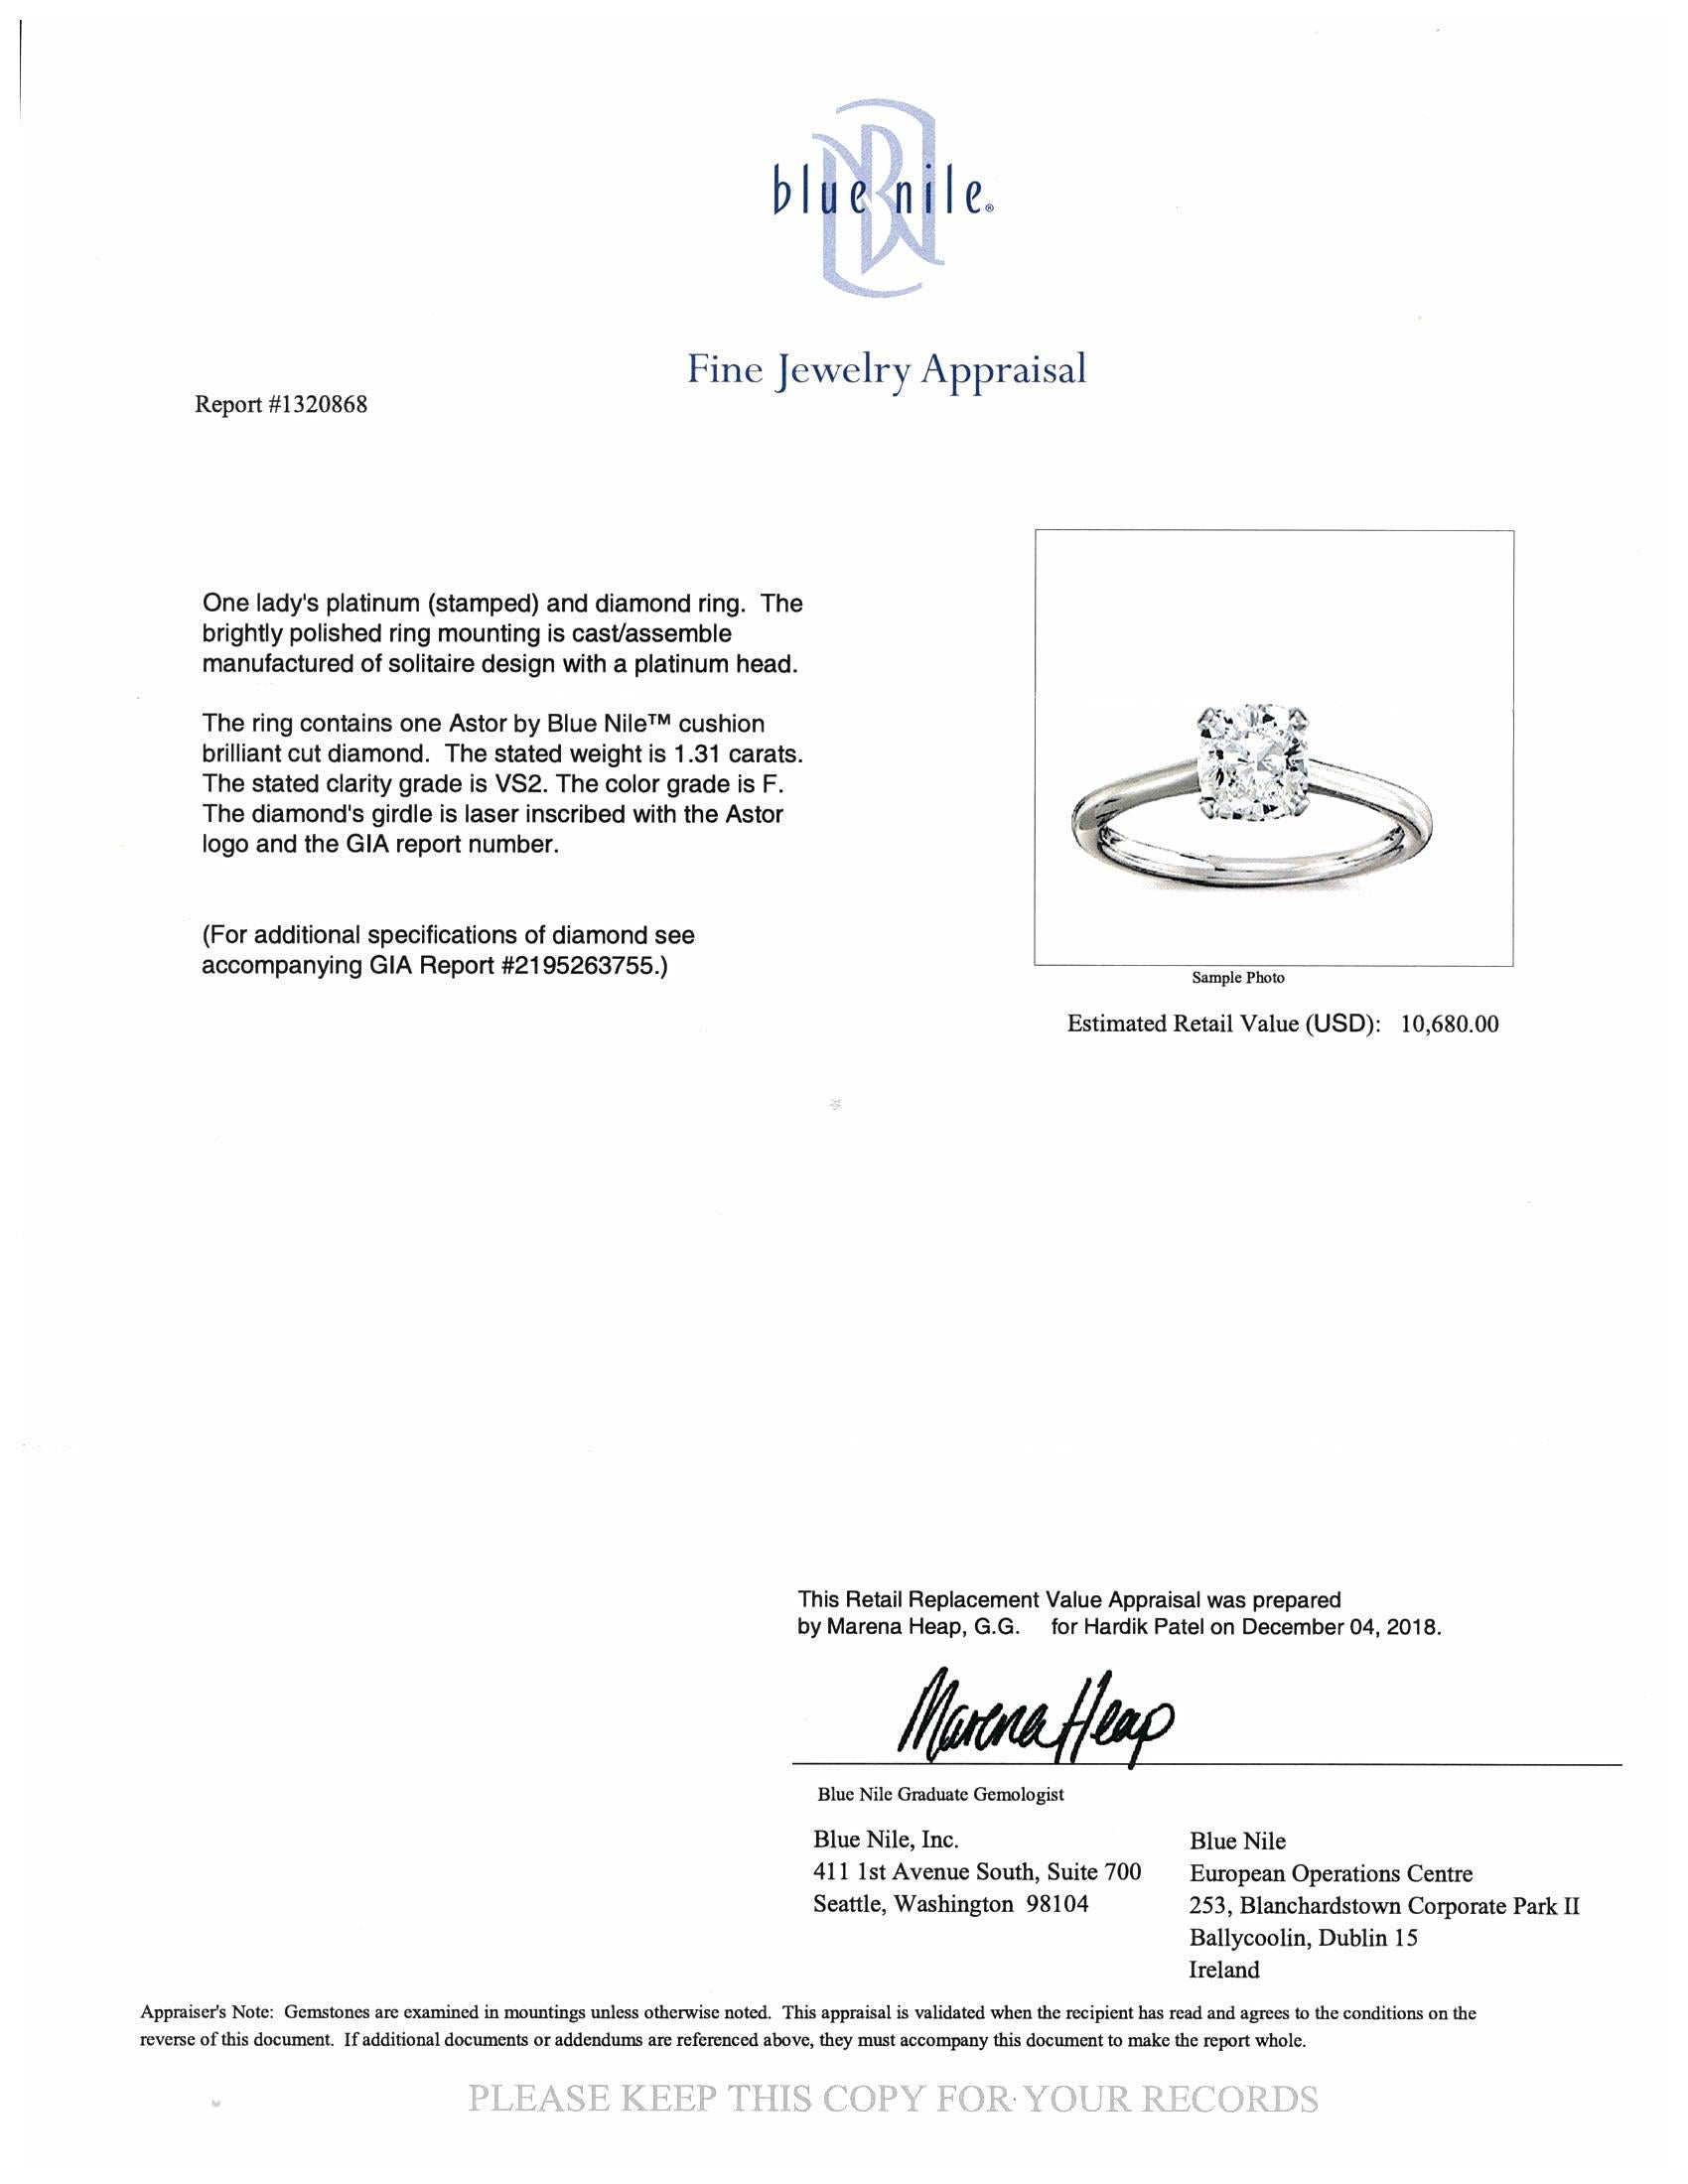 1.31ct Blue Nile Astor Cushion Diamond Engagement Ring F VS2 GIA in Platinum 1